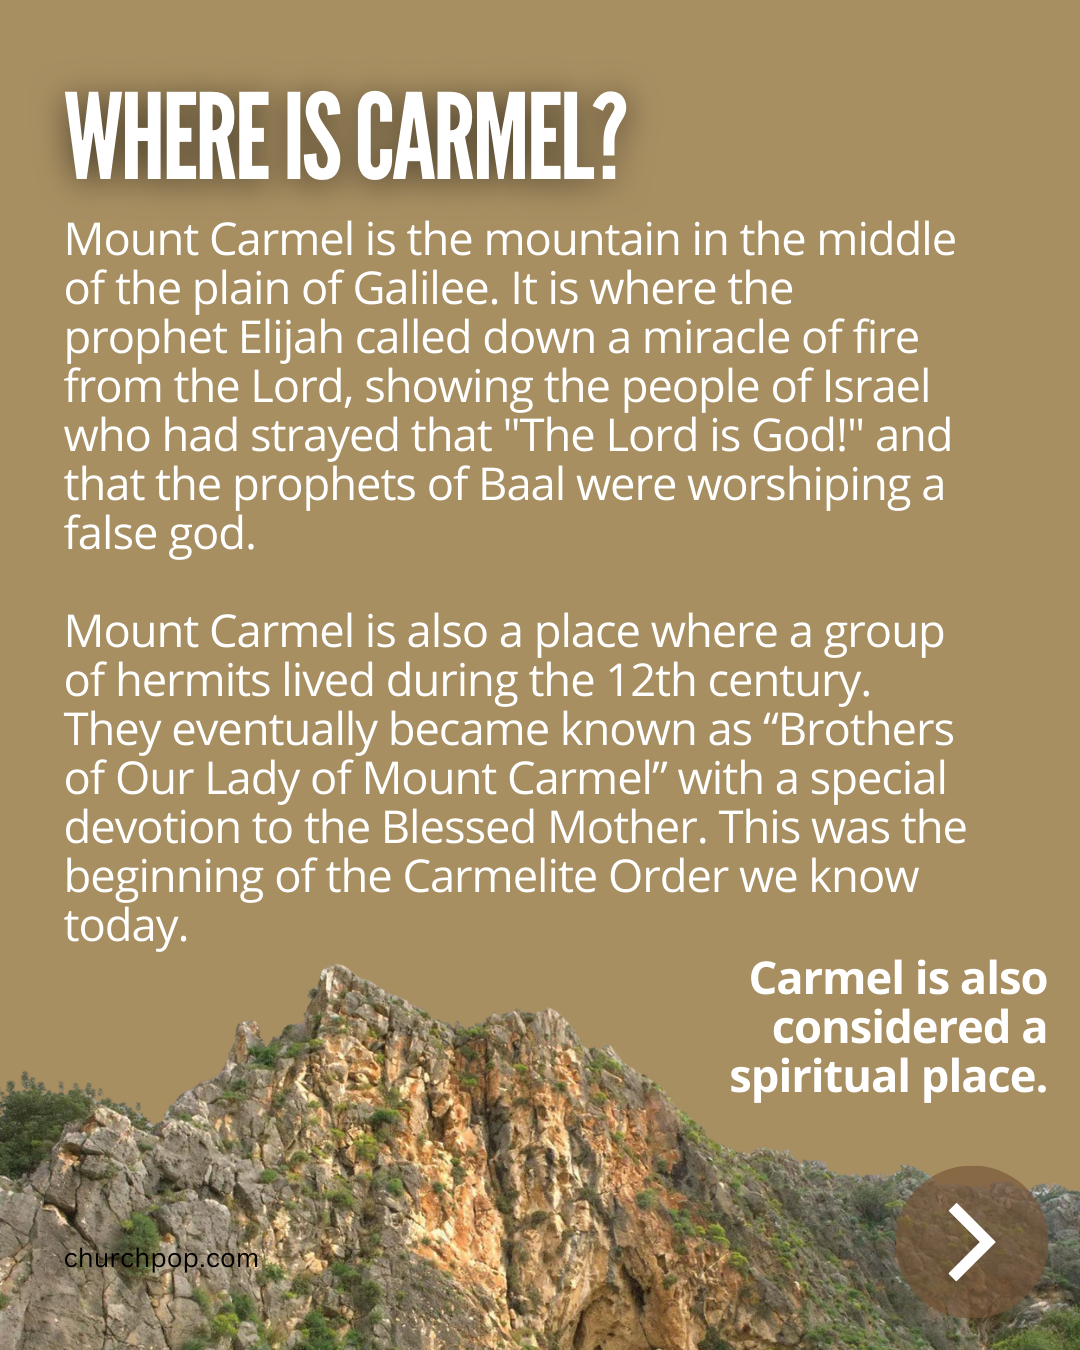 Where is Mount Carmel?